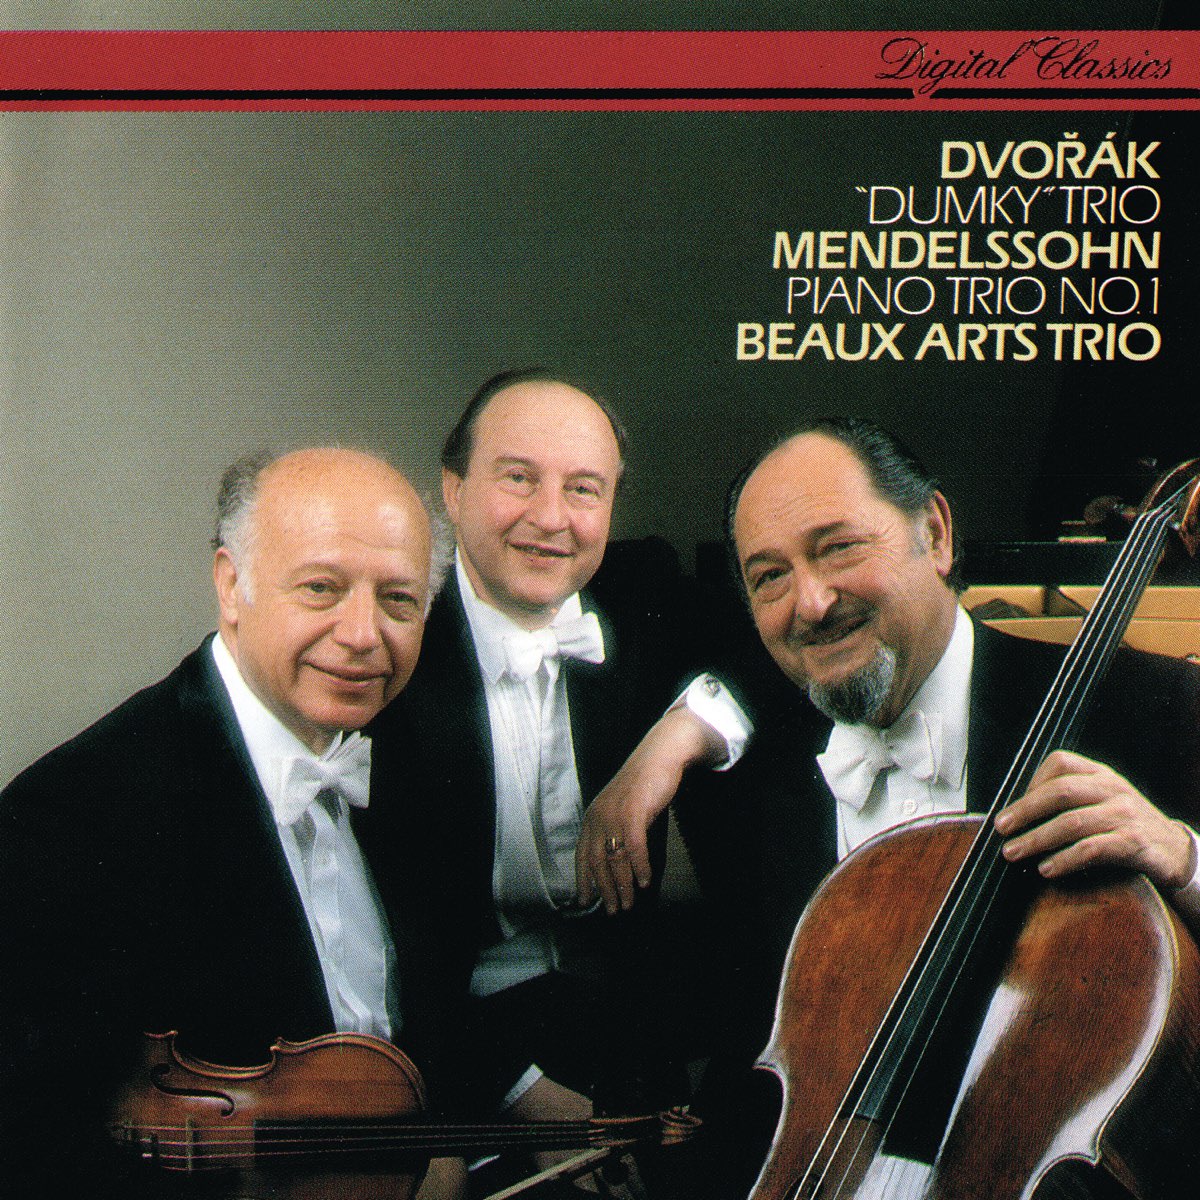 Мендельсон трио номер один. Beaux Arts Trio. Аренский трио Ре минор слушать веаux Art Trio кто исполняет. Babajanian Piano Trios Trio Lille.